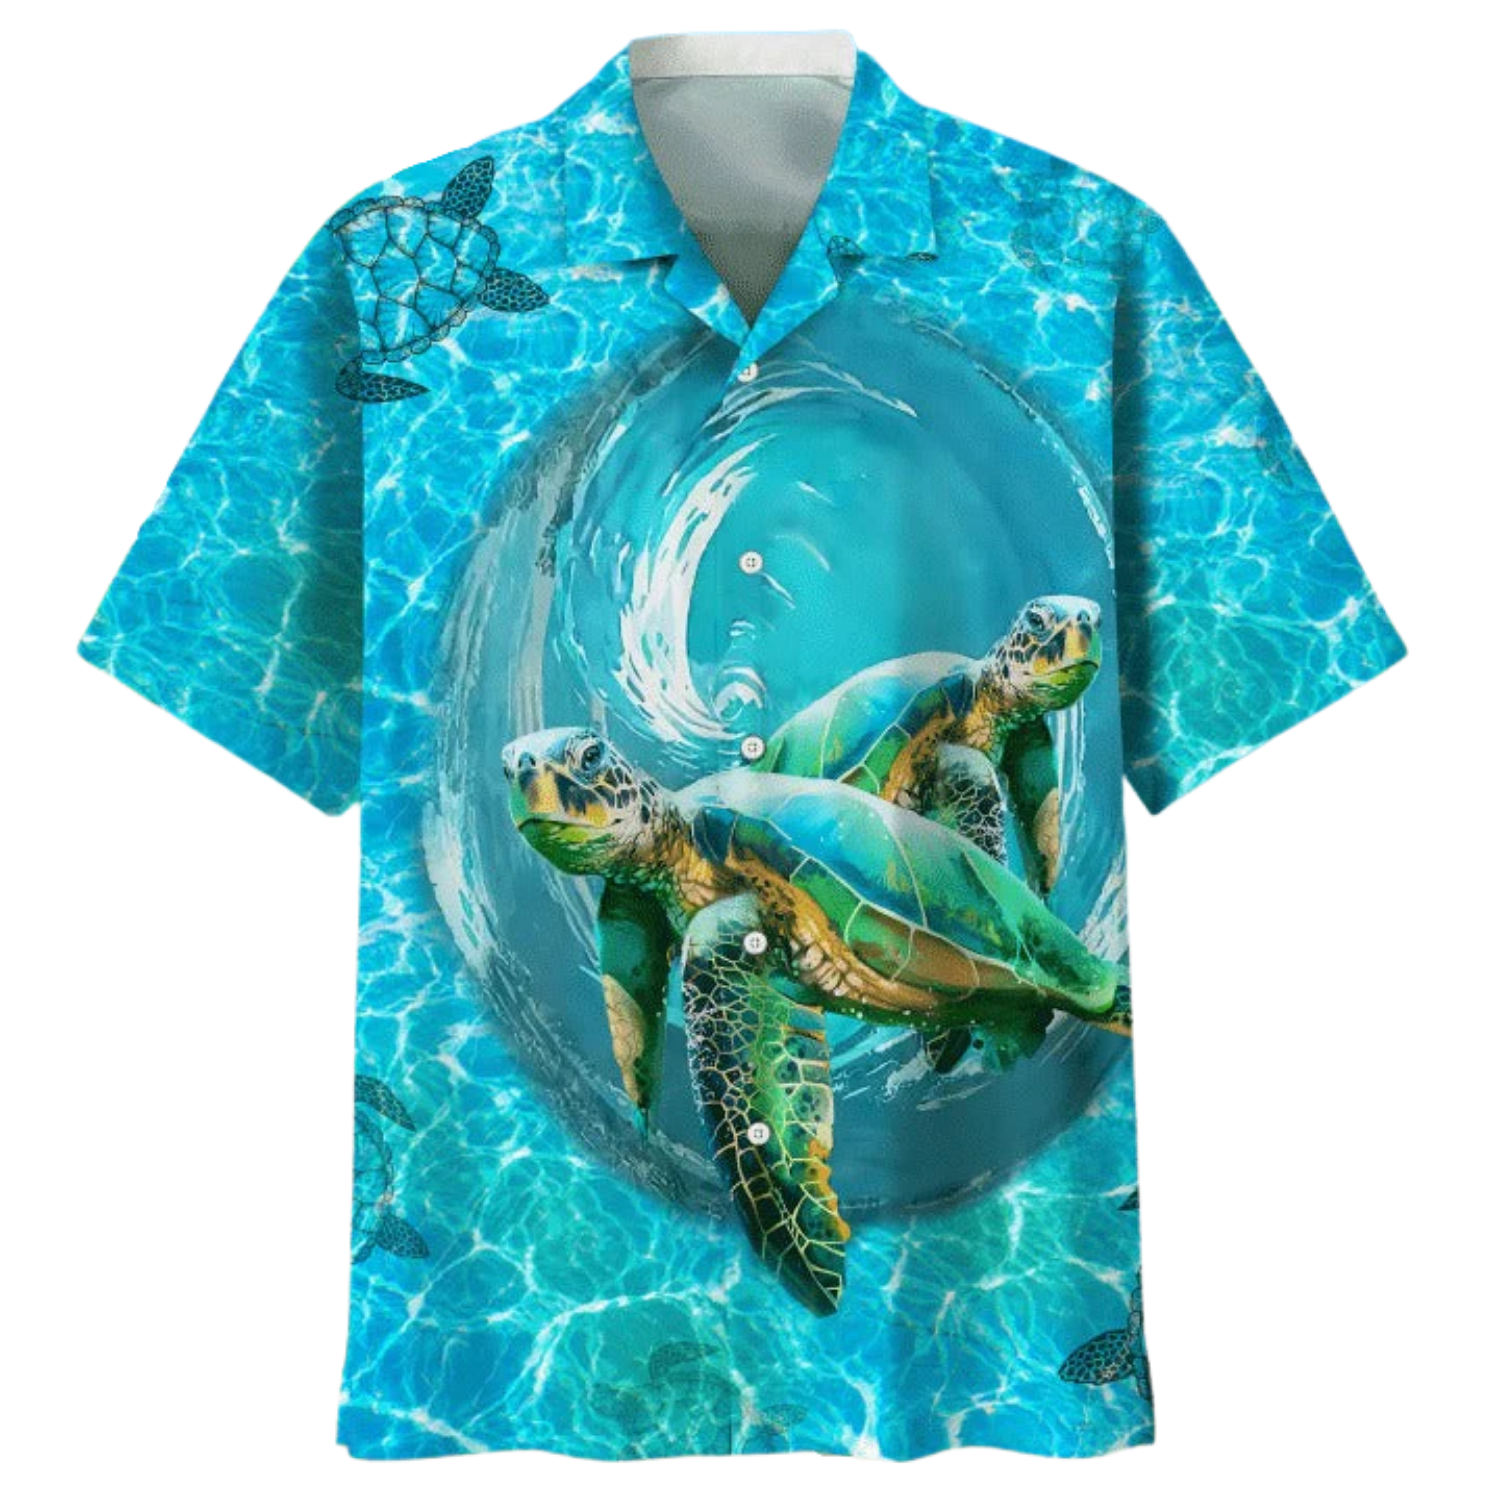 The Hawaiian Shirt Trend Makes a Comeback